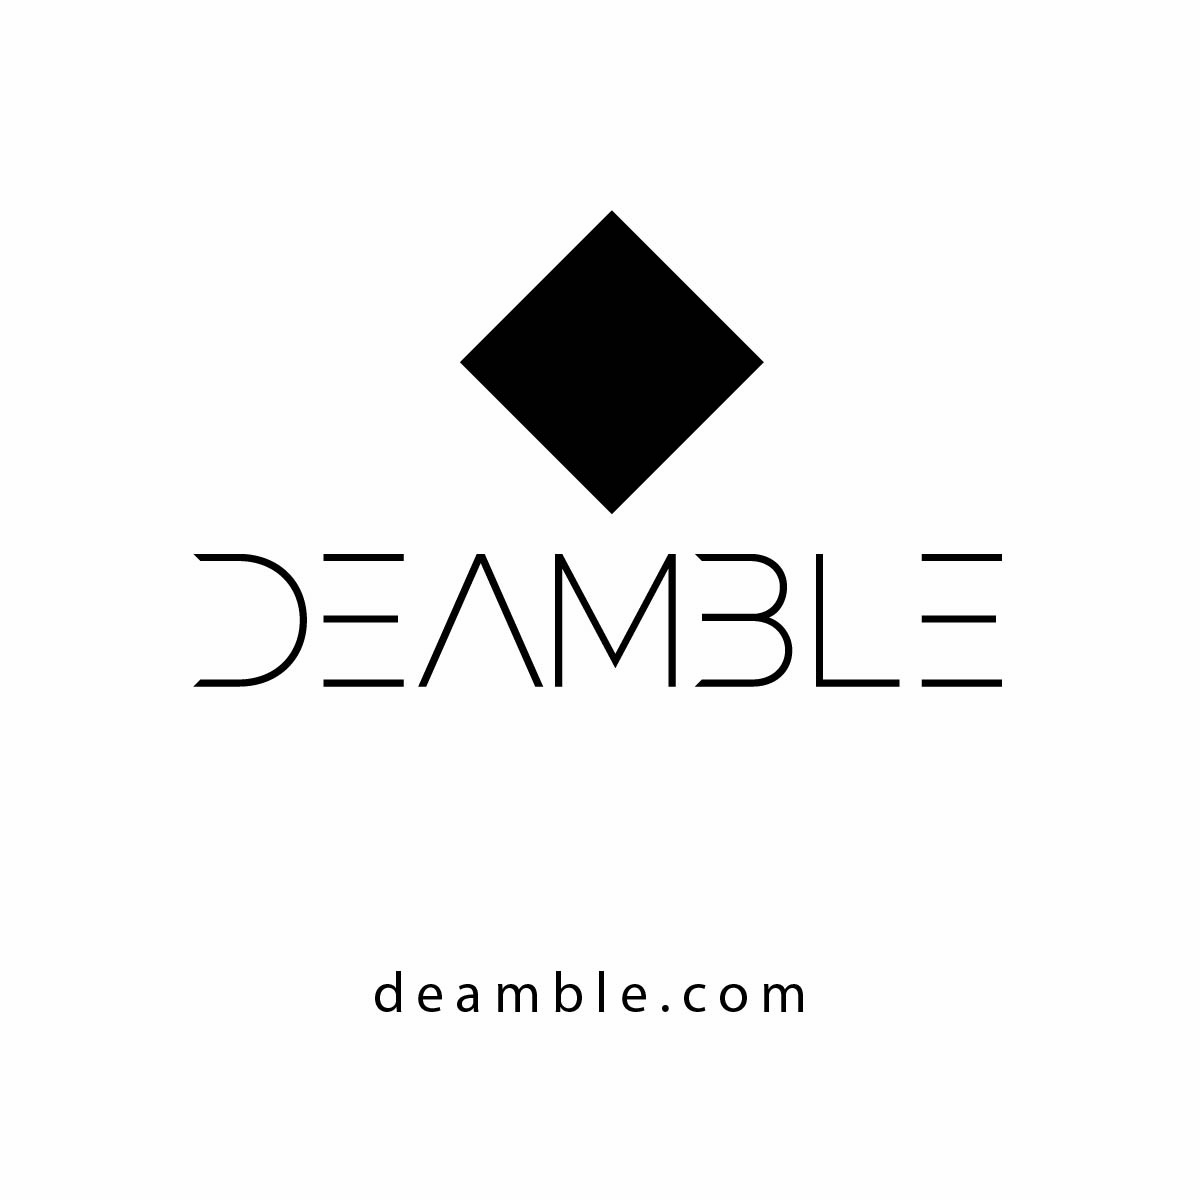 deamble.com - branding name